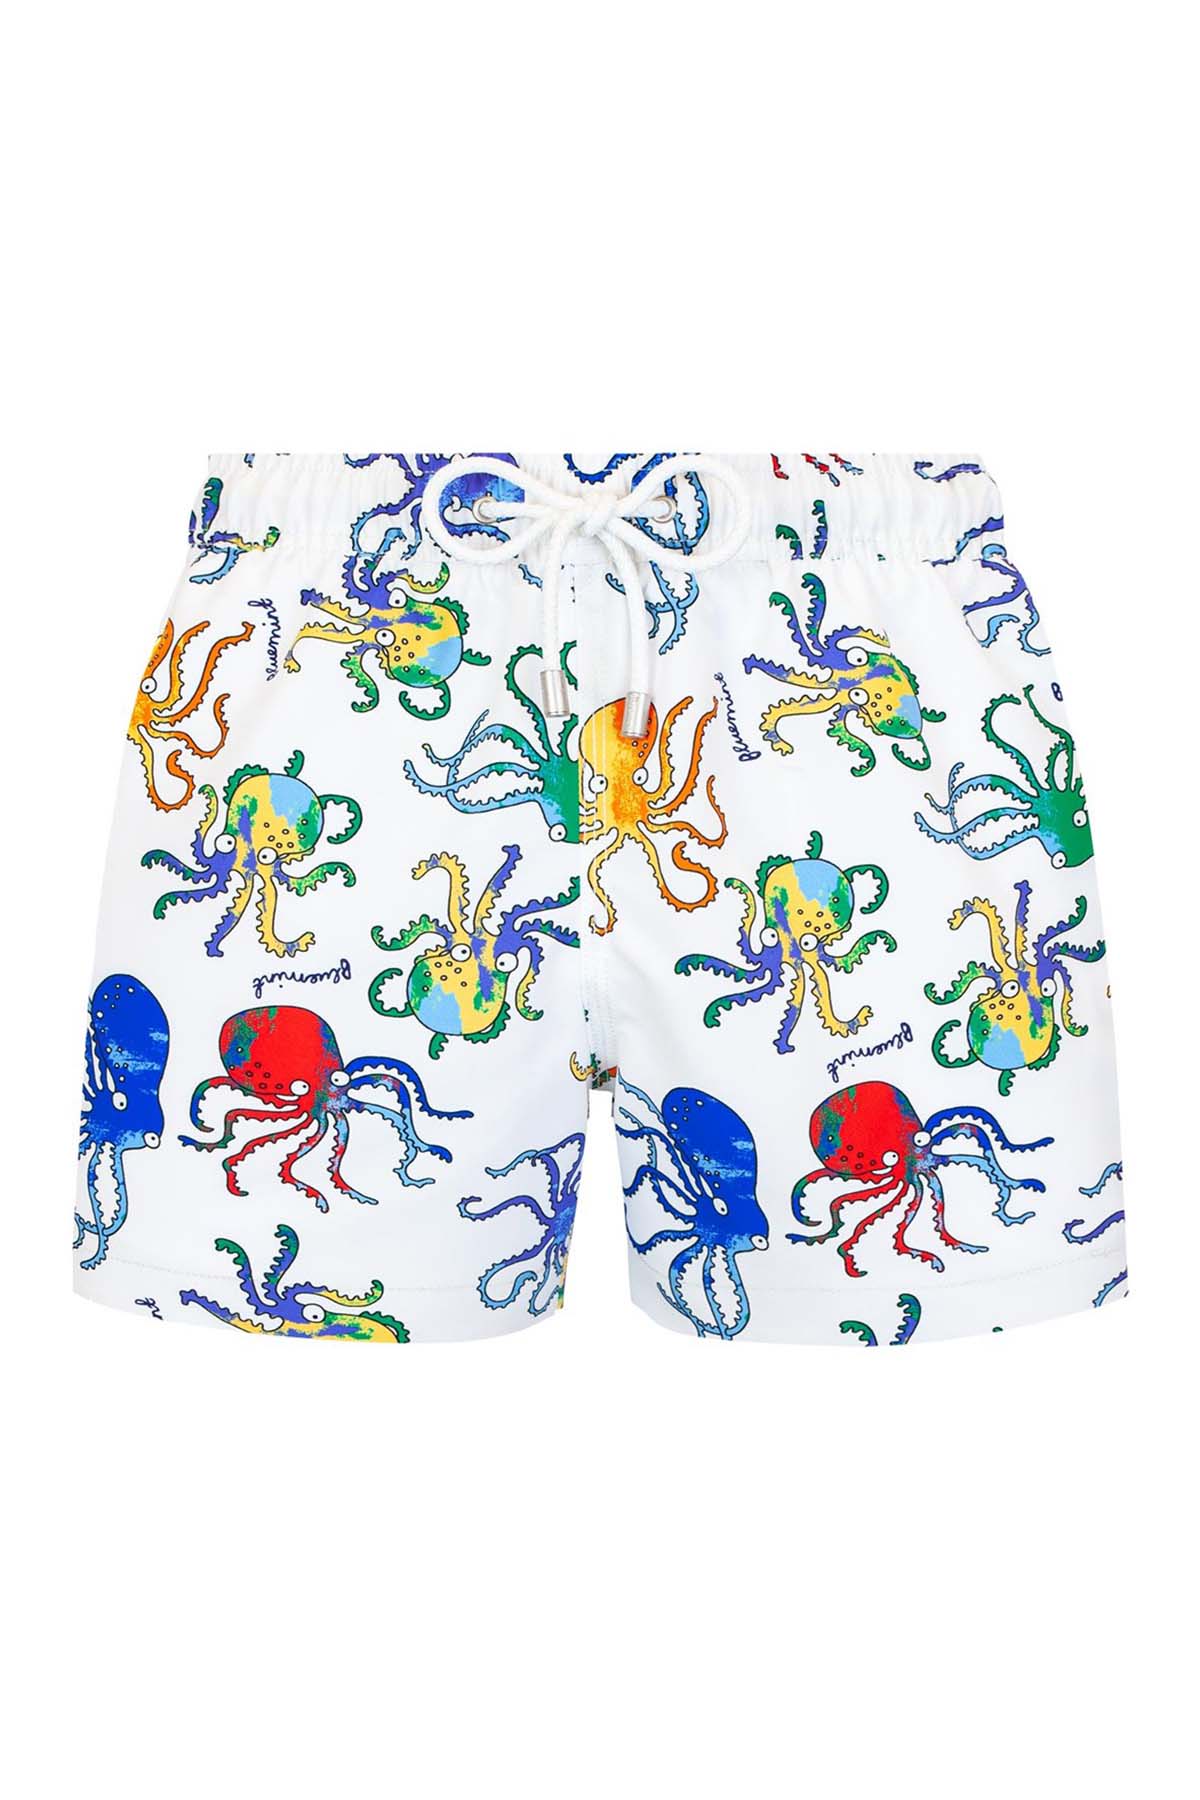 Bluemint Kids 2-12 Yaş Erkek Çocuk Arthus White Octopus Şort Mayo-Libas Trendy Fashion Store